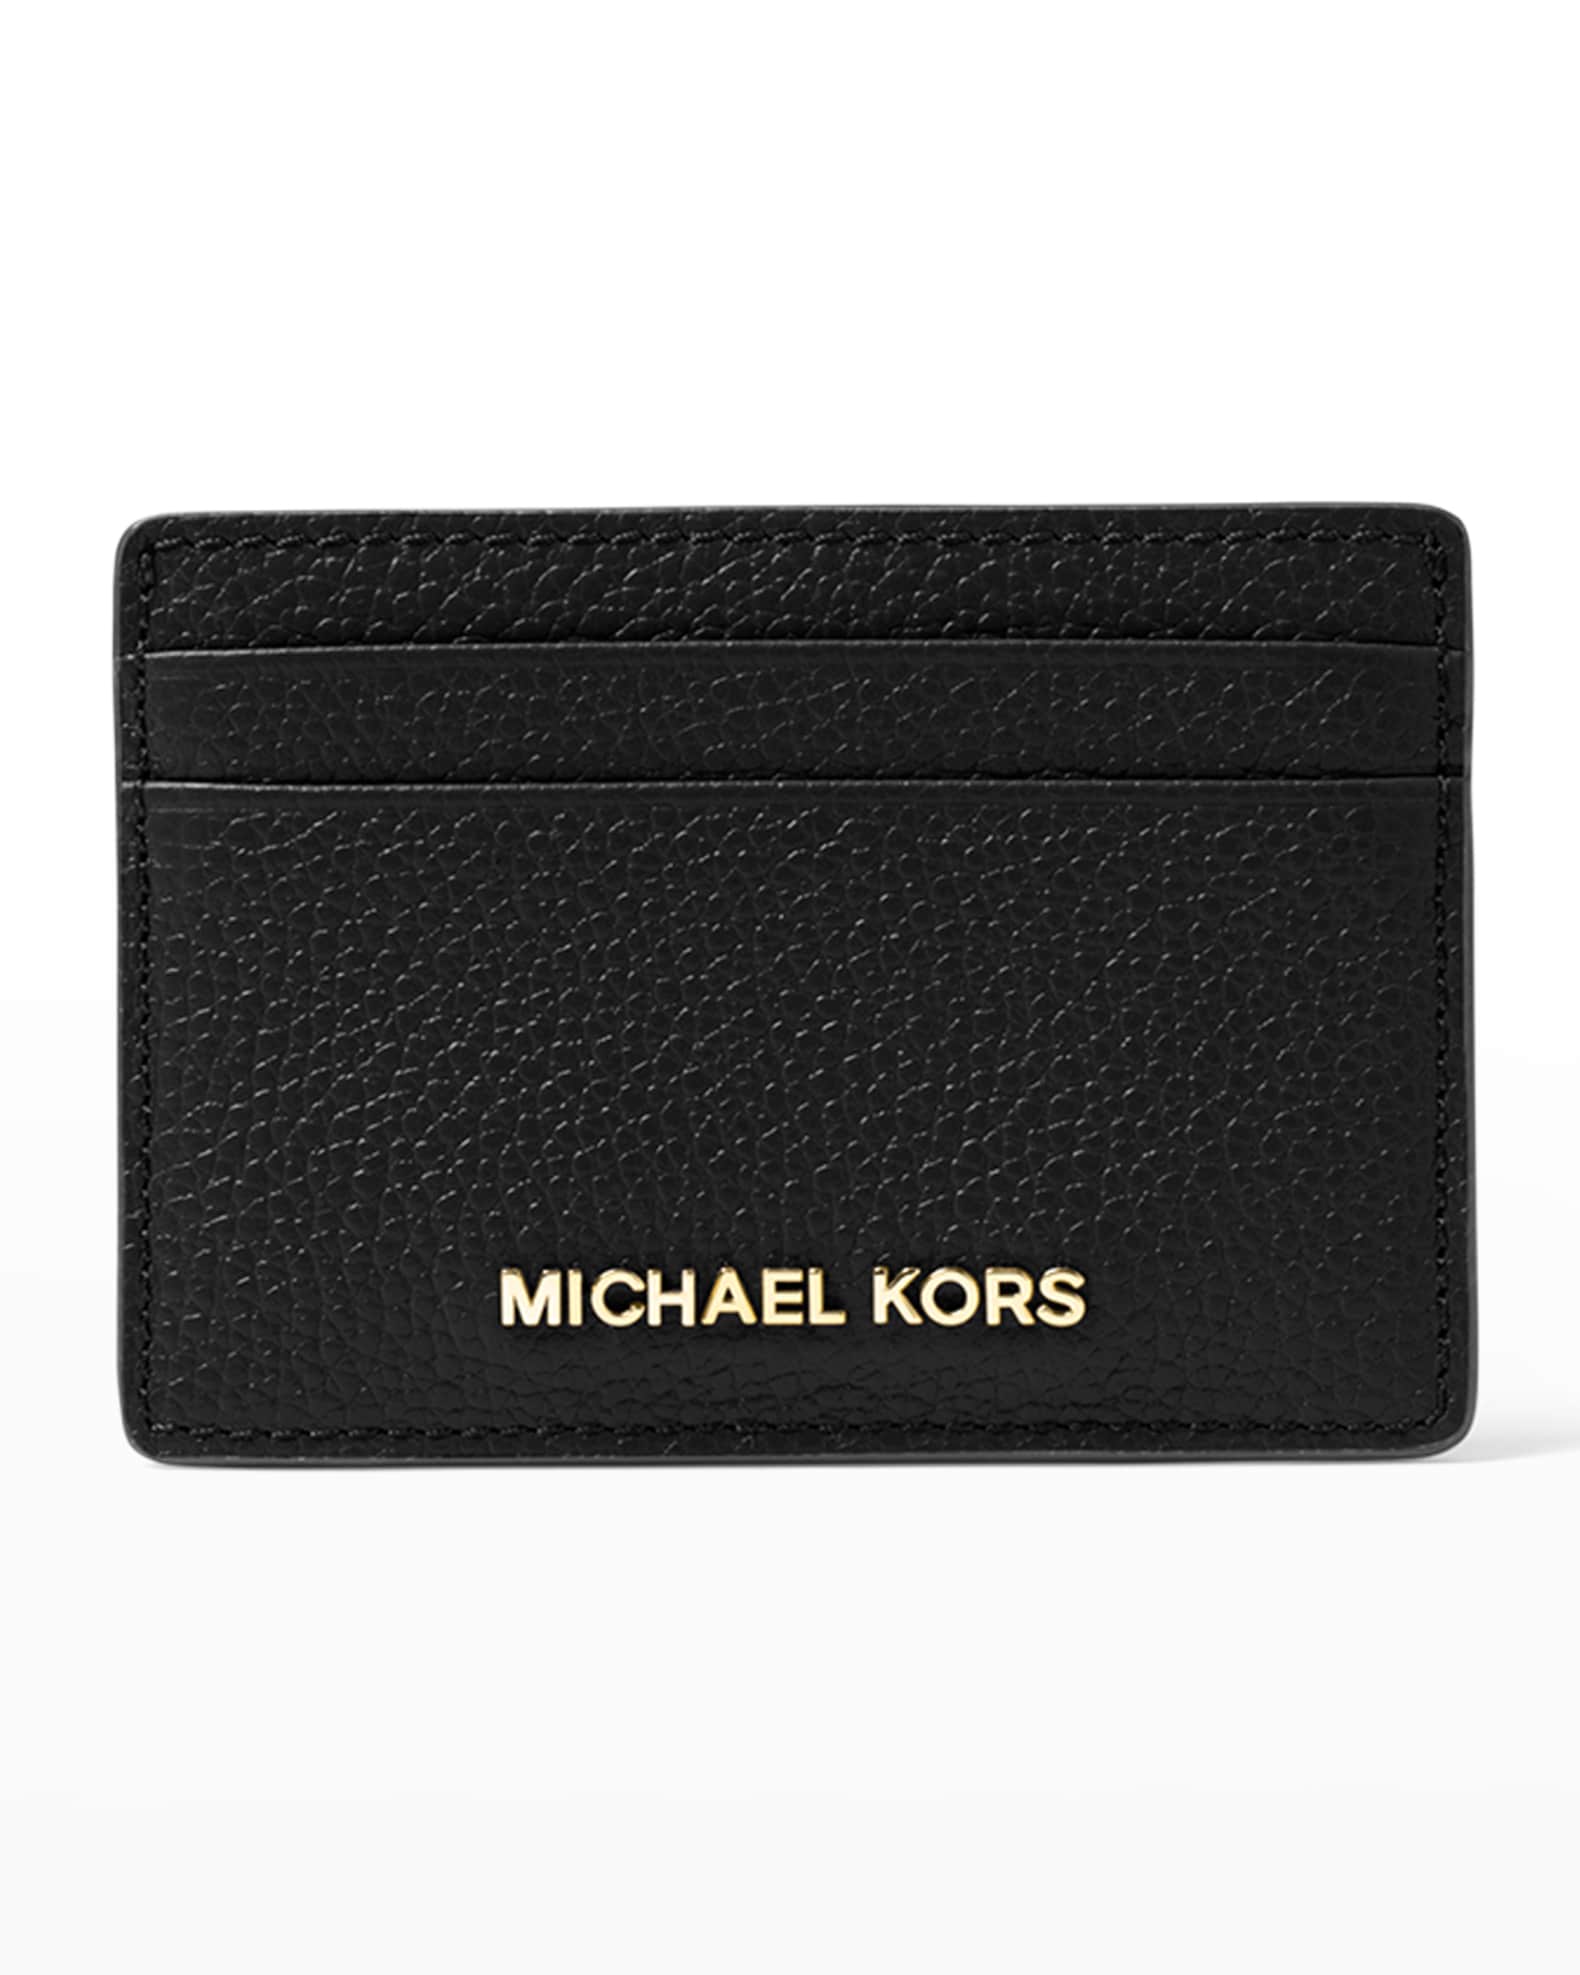 Michael Kors Jet Set Travel Flat Wallet 18k in Black